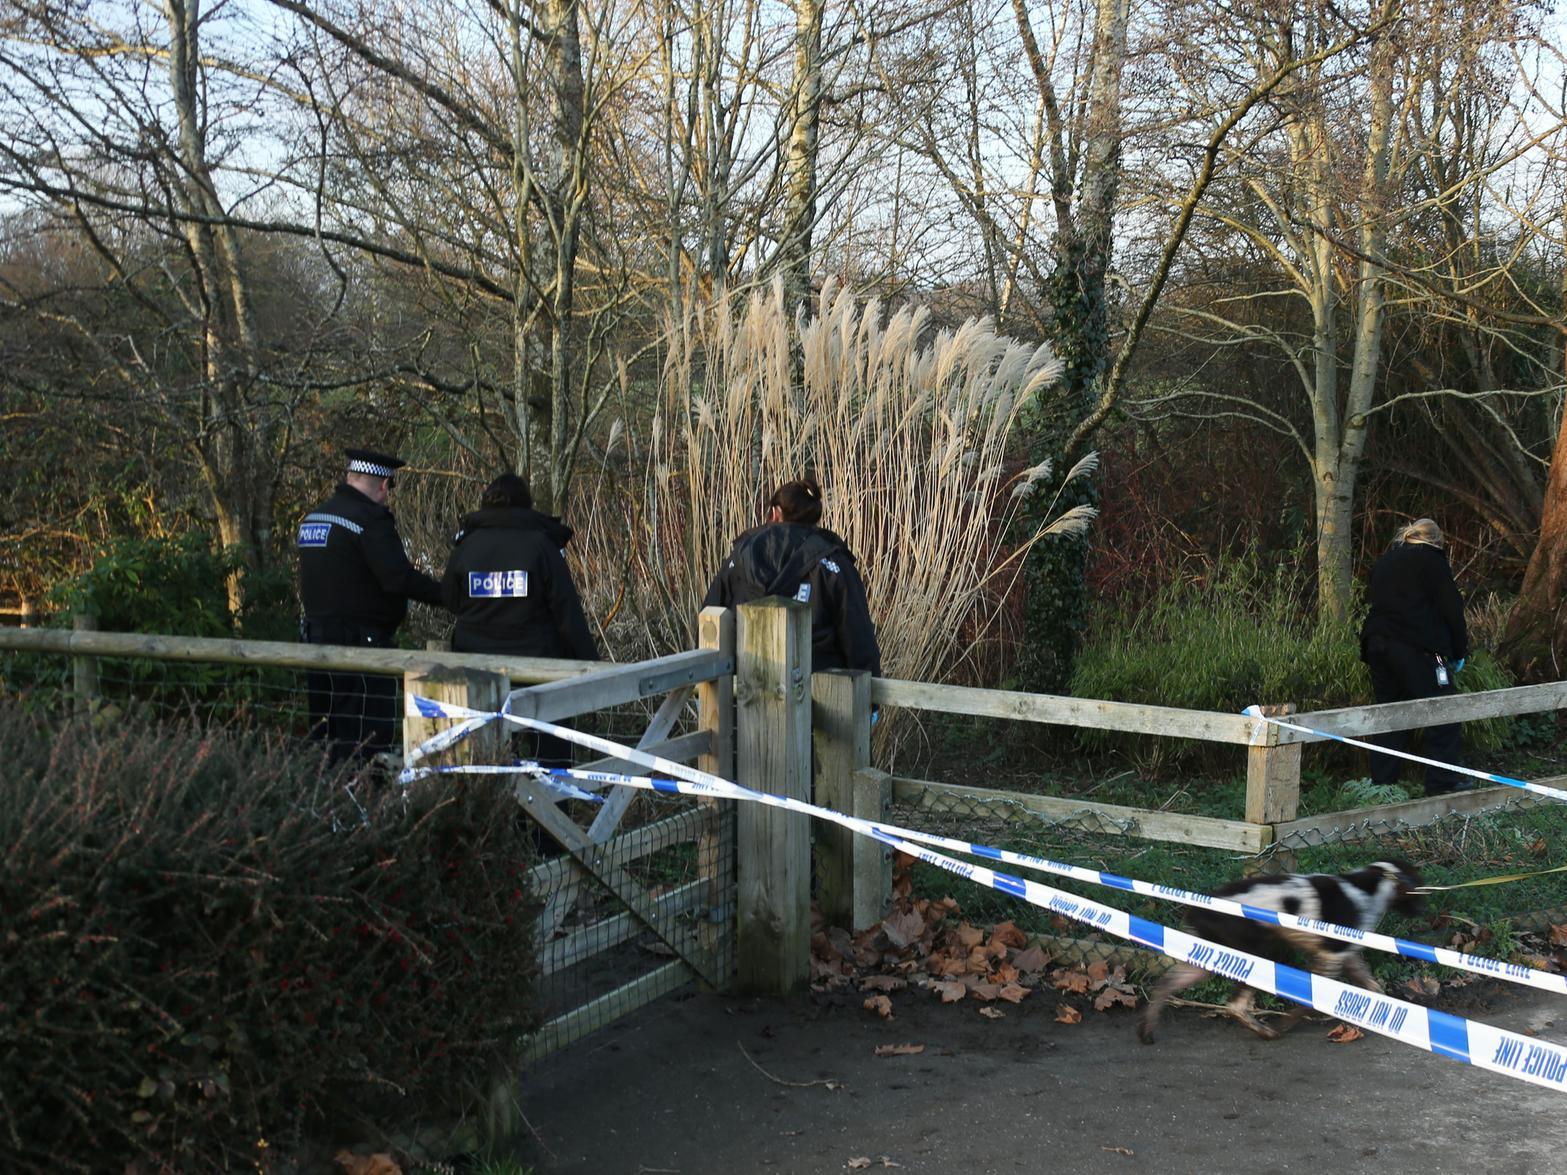 The scene of the incident in Horsham Park